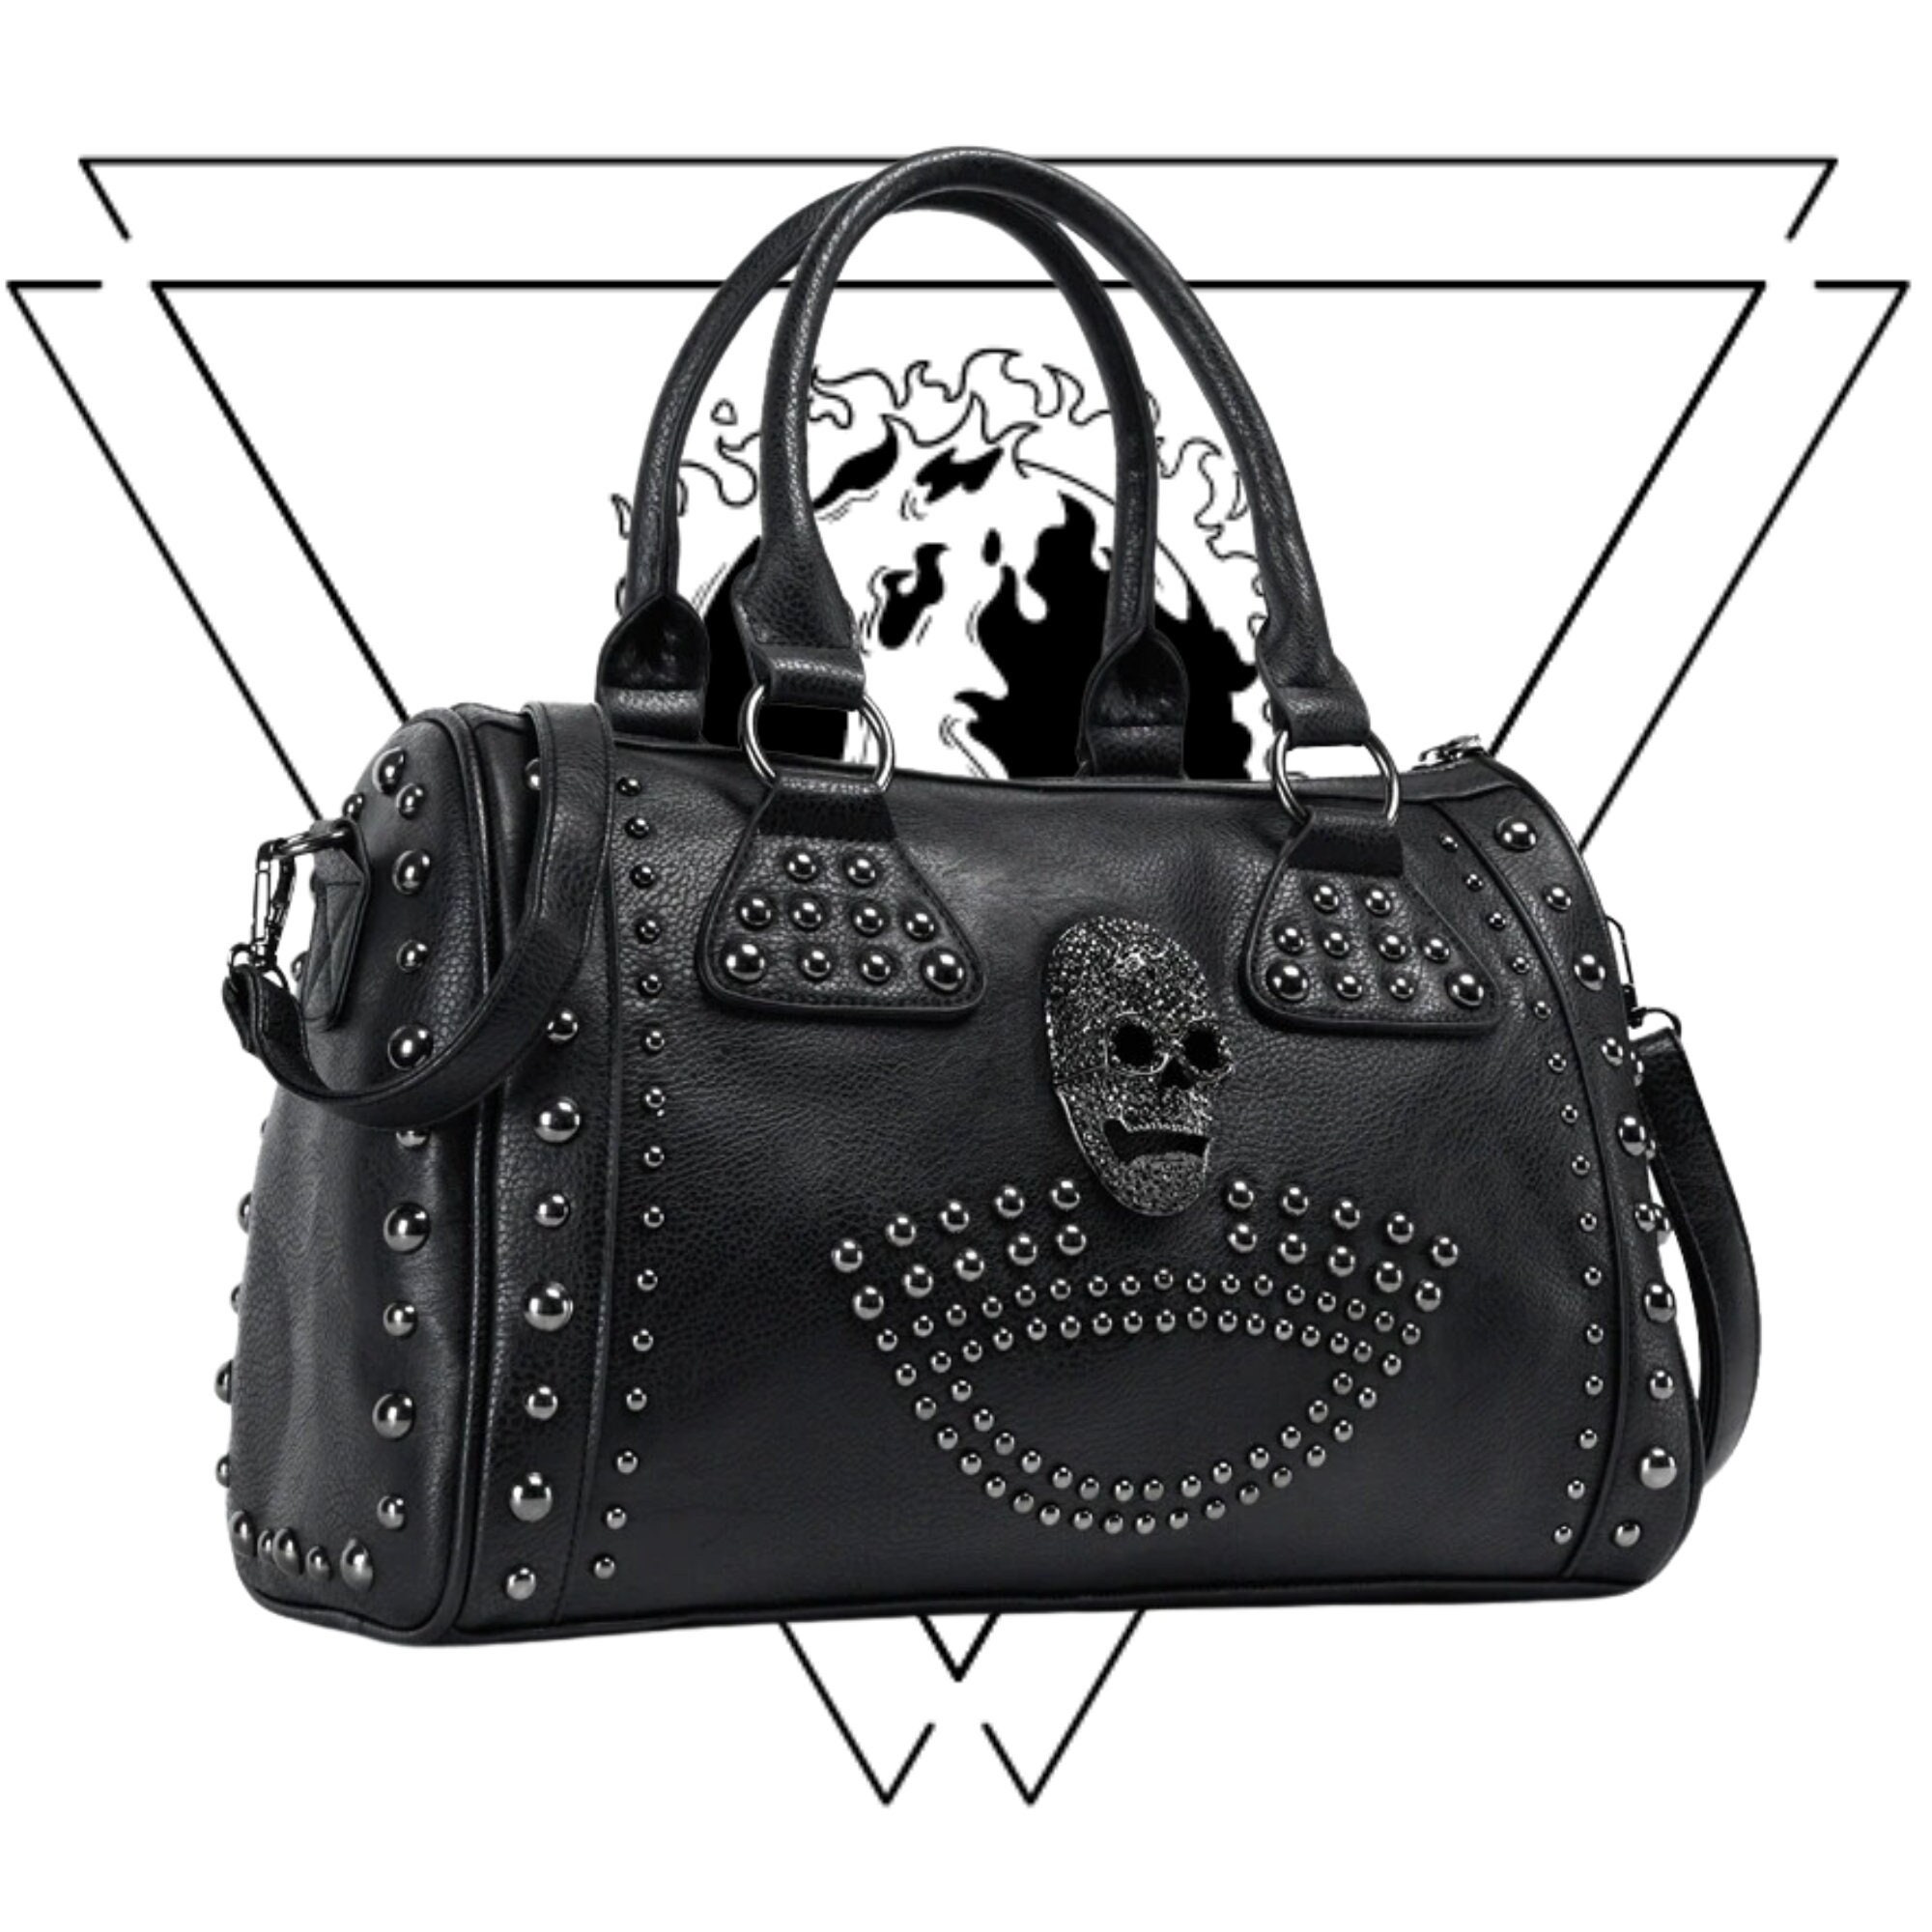 Studded Black Small Leather Bag, Shoulder Holster Bag, Dark Leather  Crossbody Bag Studded, Women Gothic Handbag Adjustable Strap With Studs -  Etsy